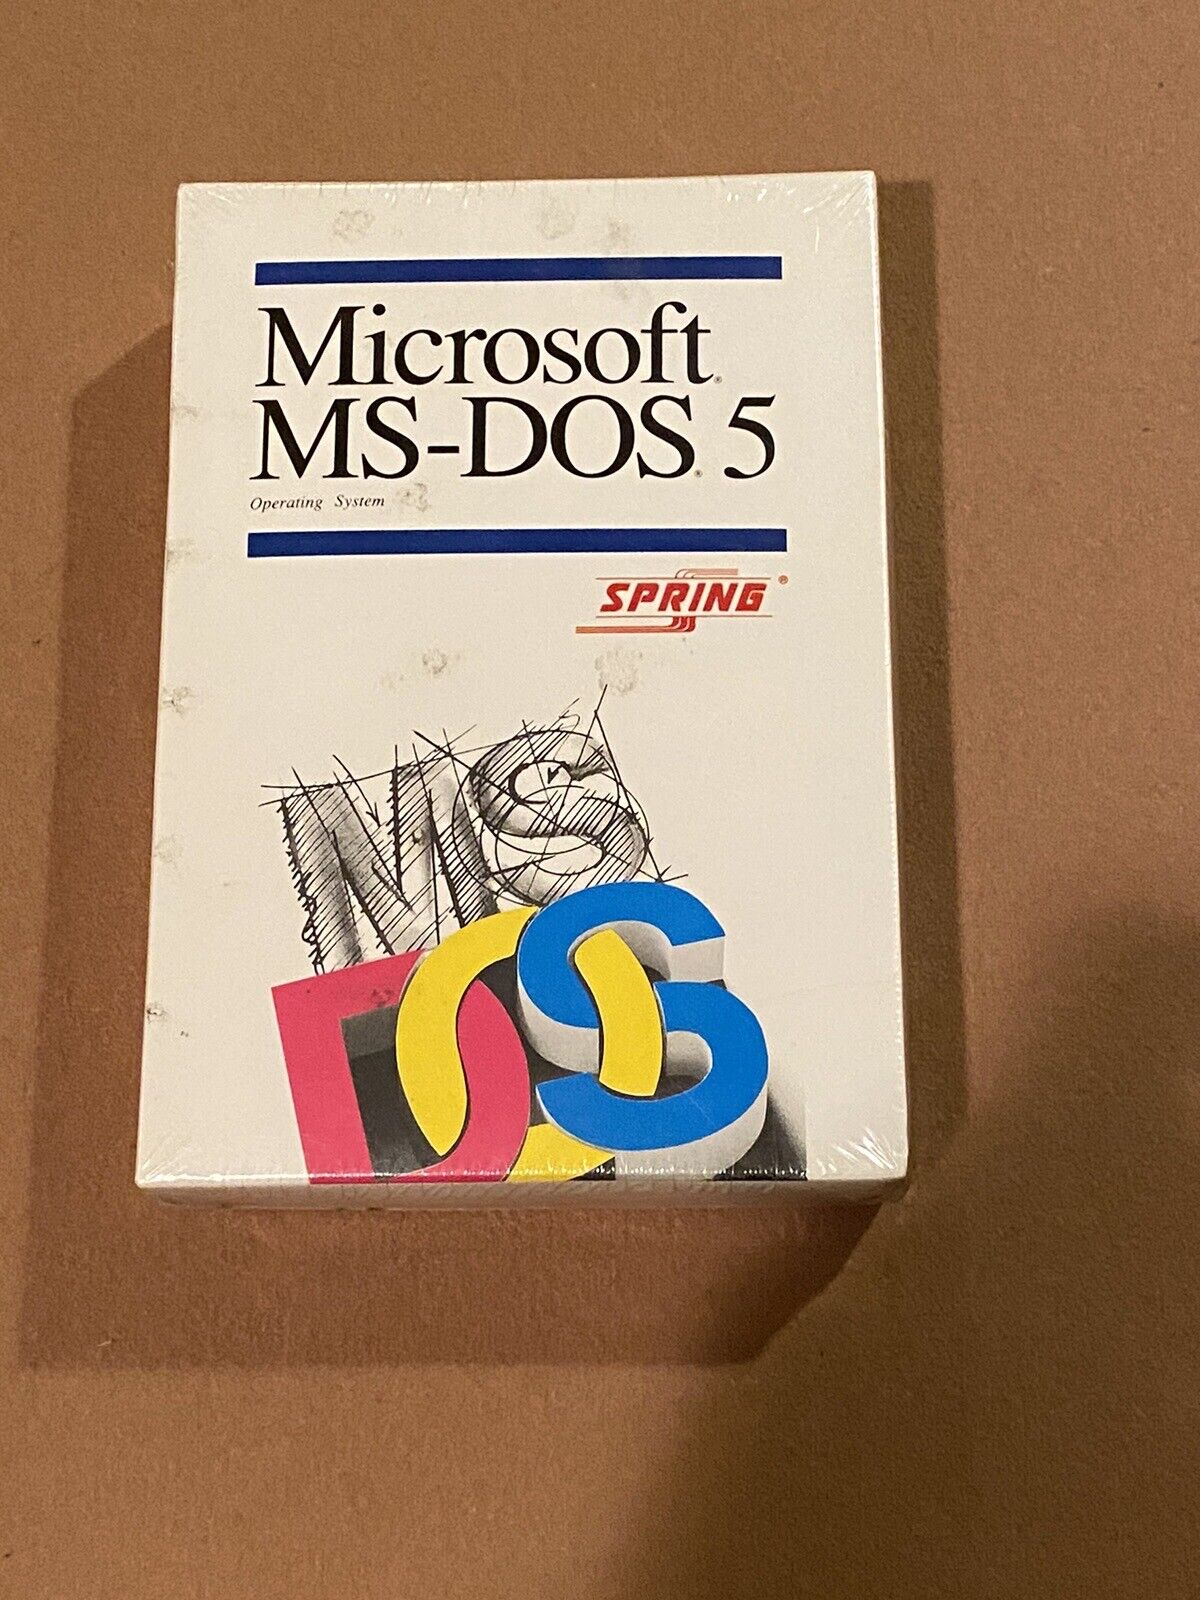 Microsoft MS-DOS 5 Spring Operating System: Floppy Disks / Complete vintage